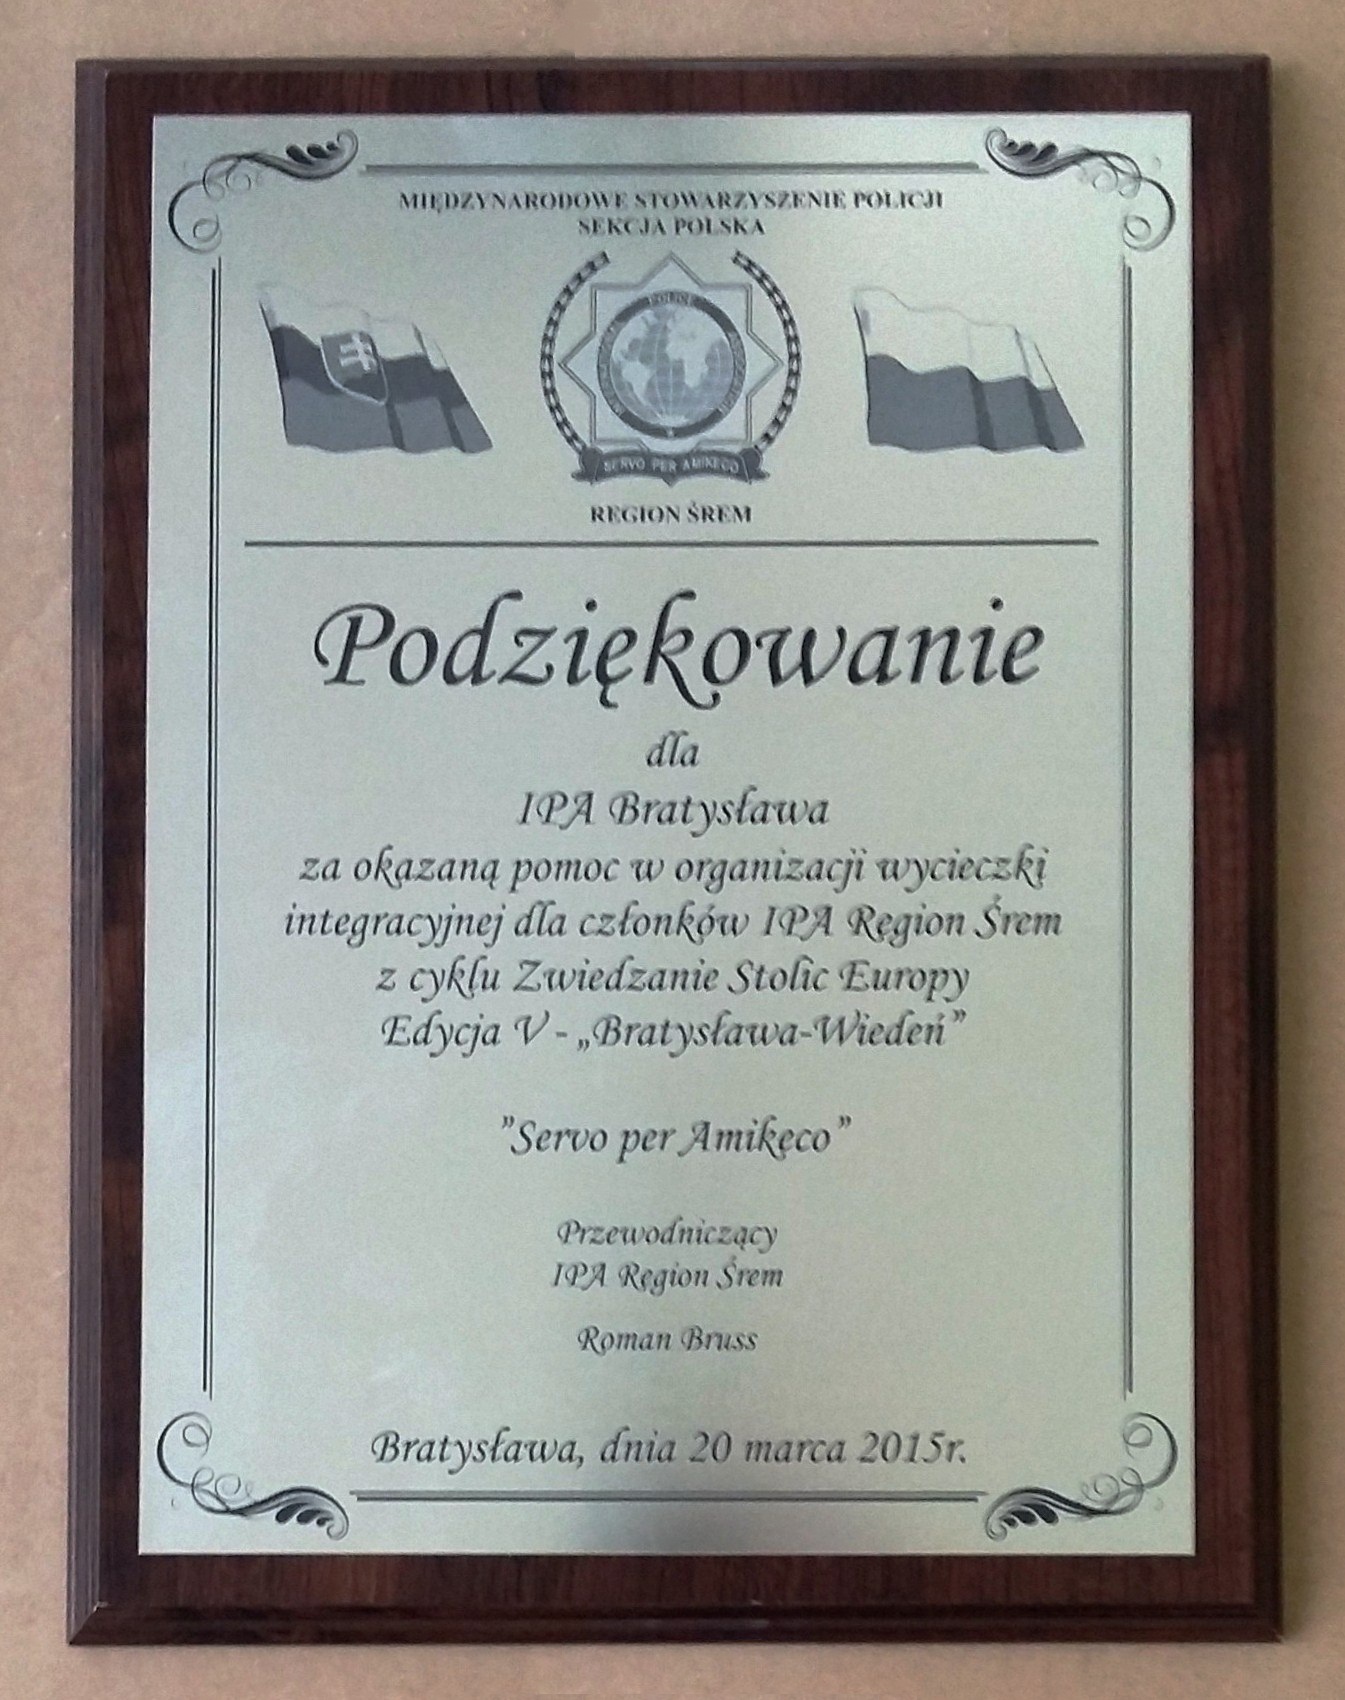 2015 IPA Poland